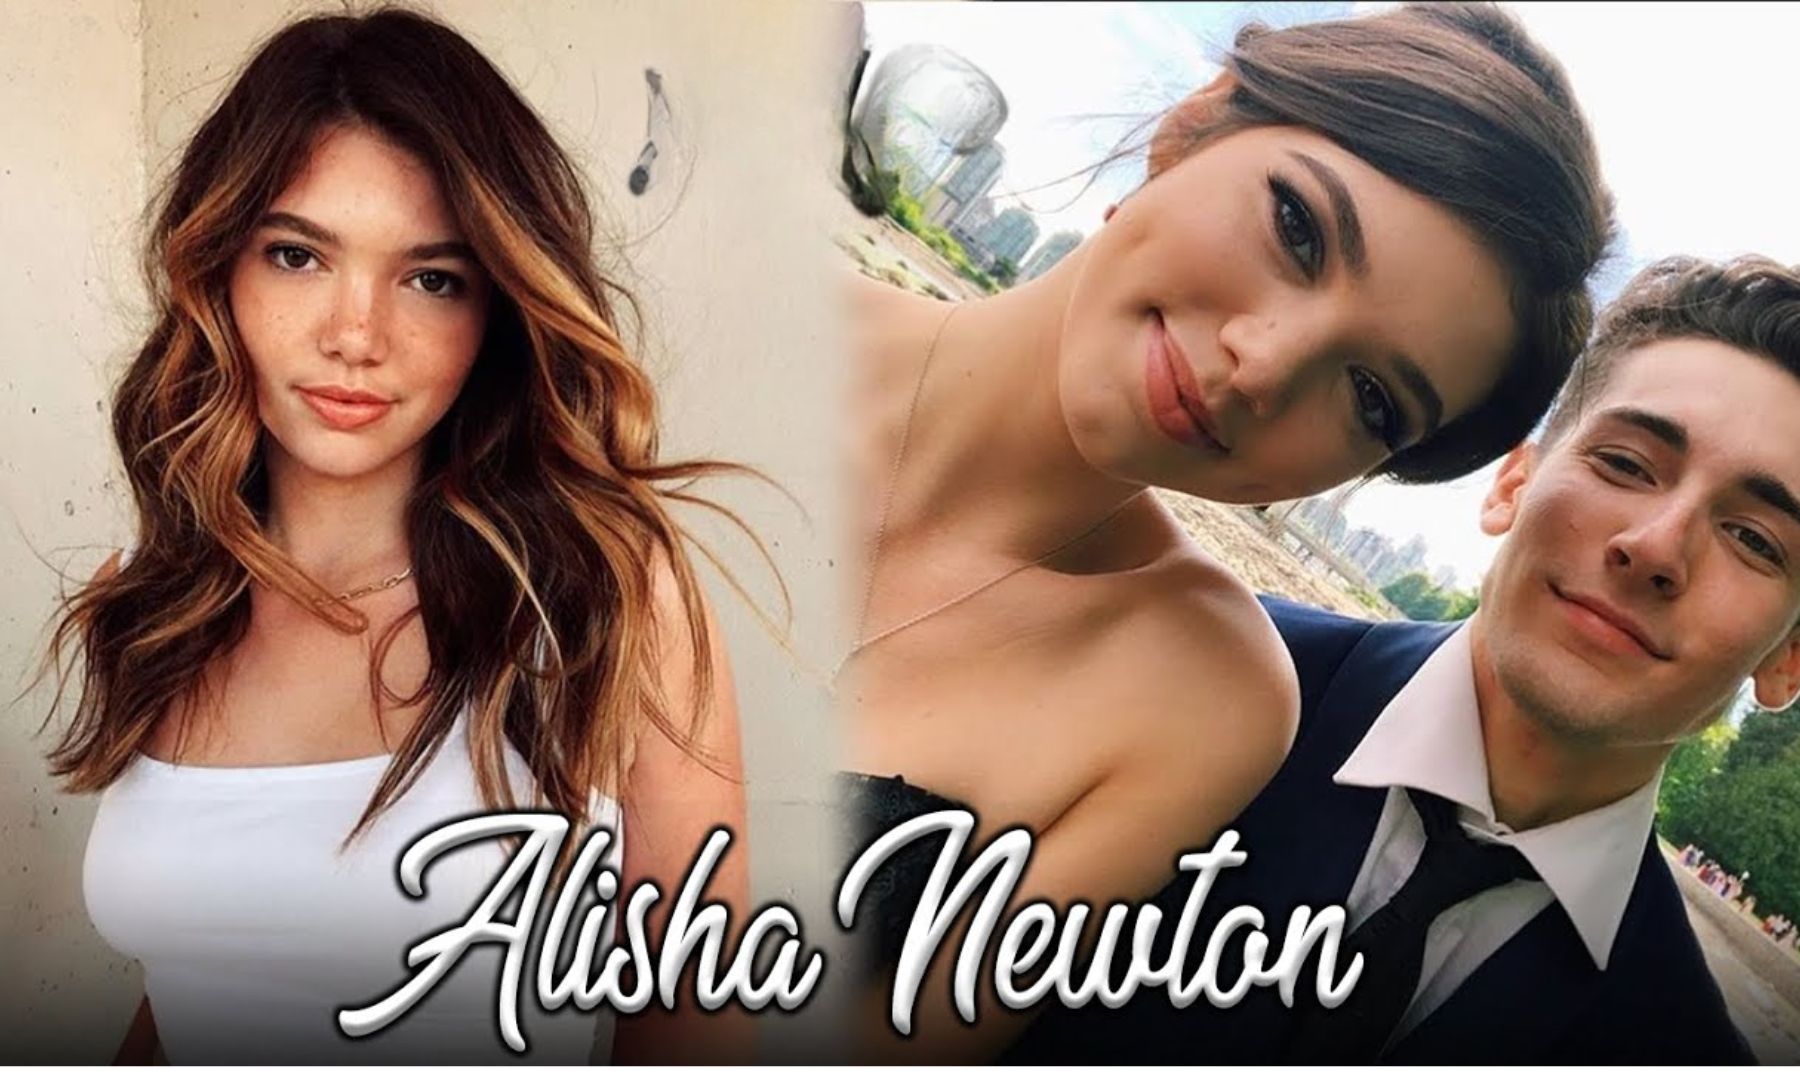 Alisha Newton Partner/Husband - Who Is Married To?